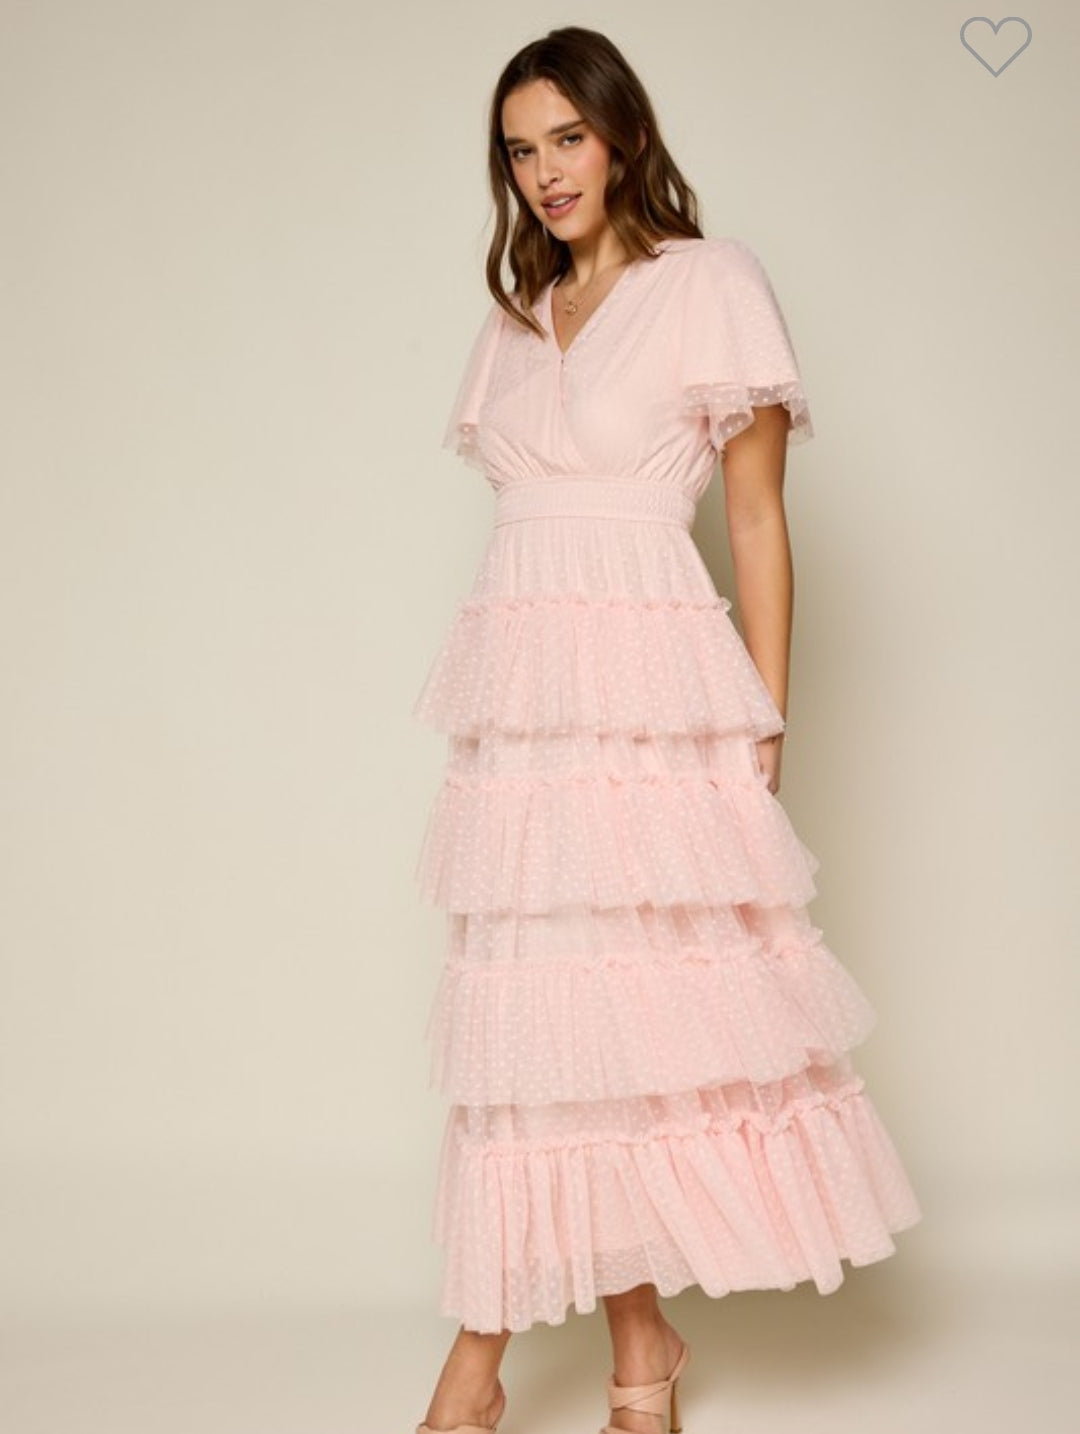 Light Pink Tulle Ruffled Dress